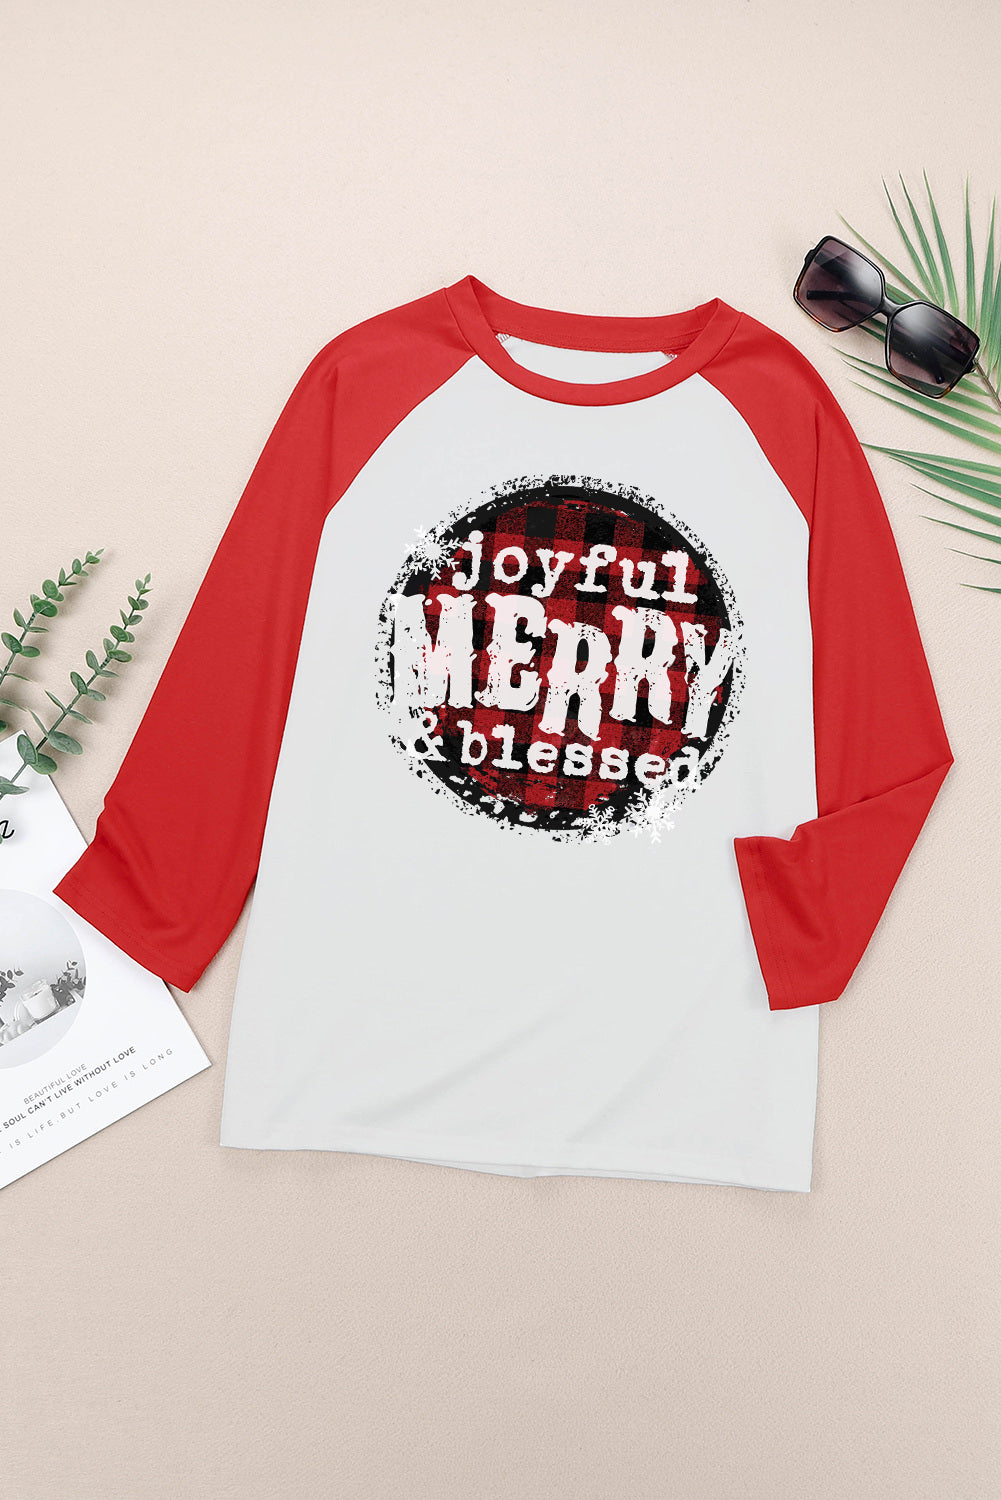 Christmas Sweatshirts Joyful Merry & Blessed Christmas Holiday Graphic Tees Tops